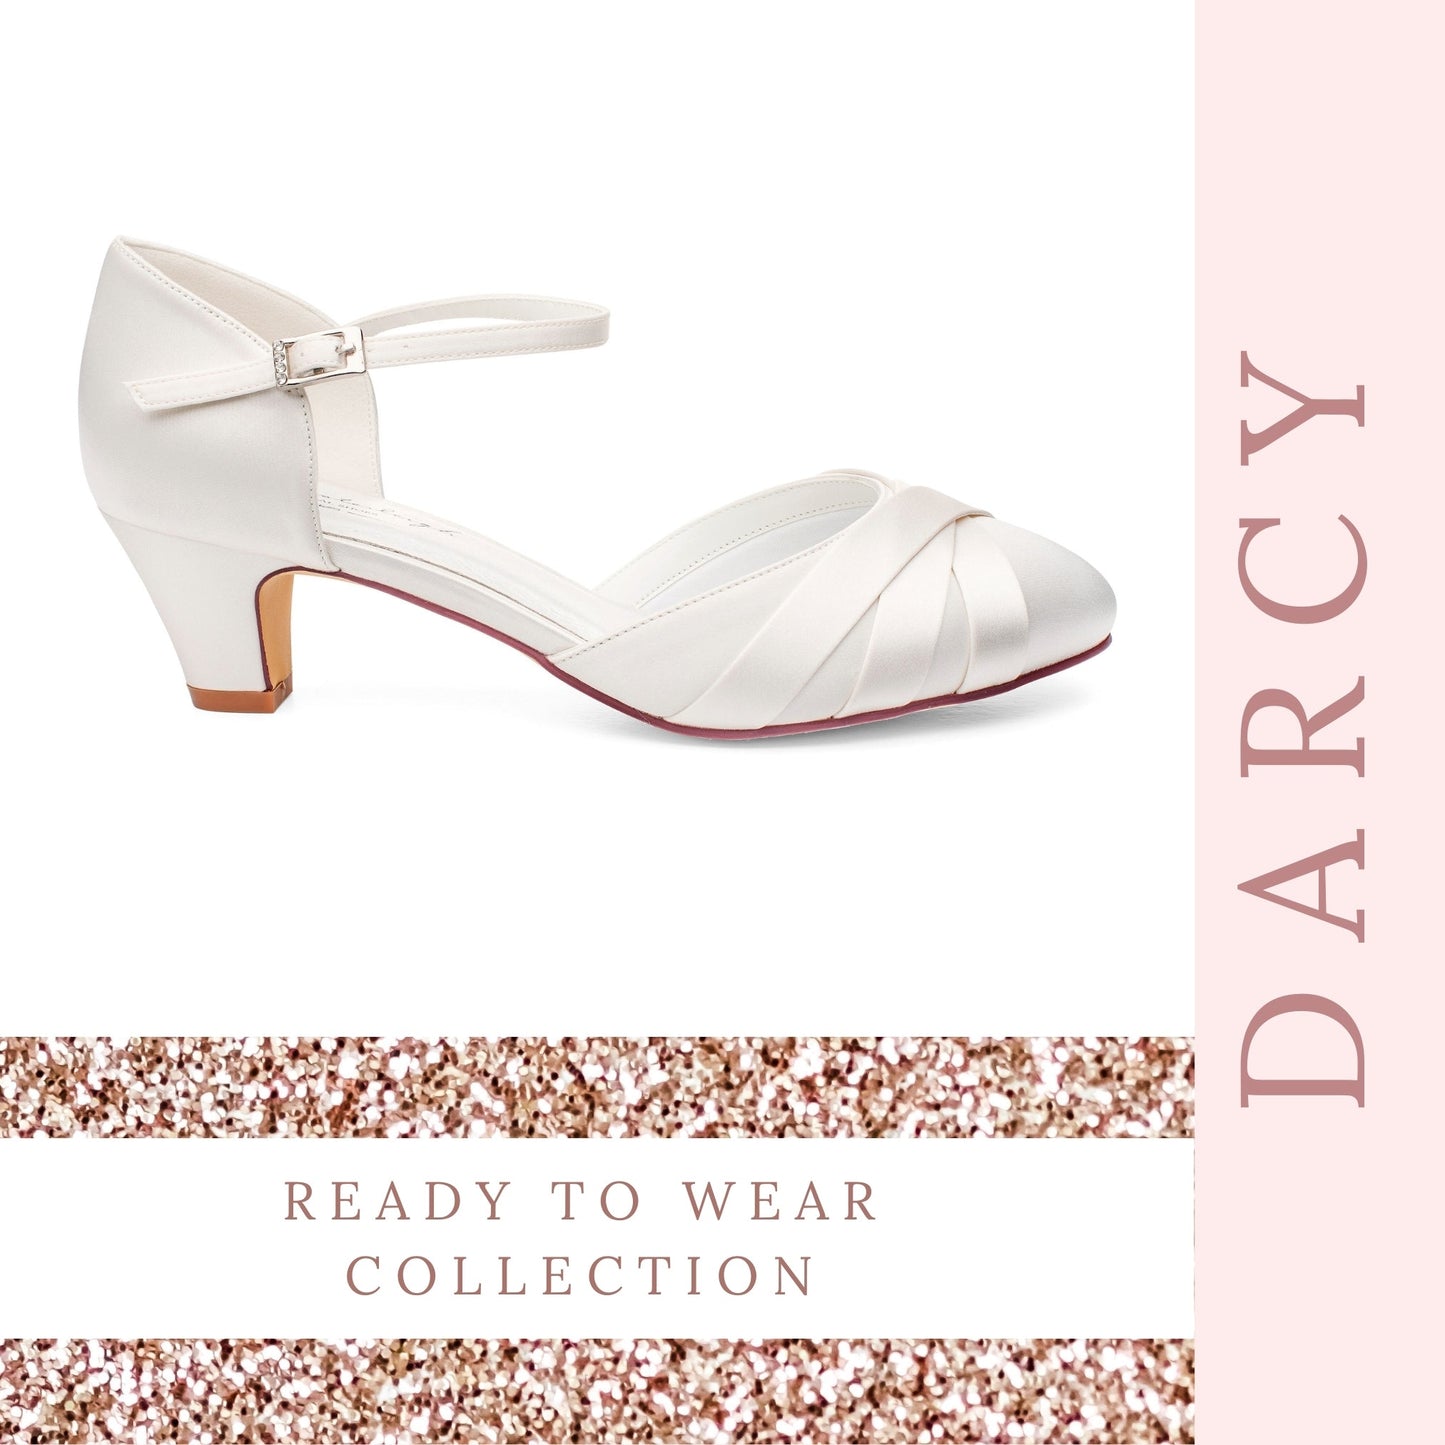 darcy-wedding-shoes